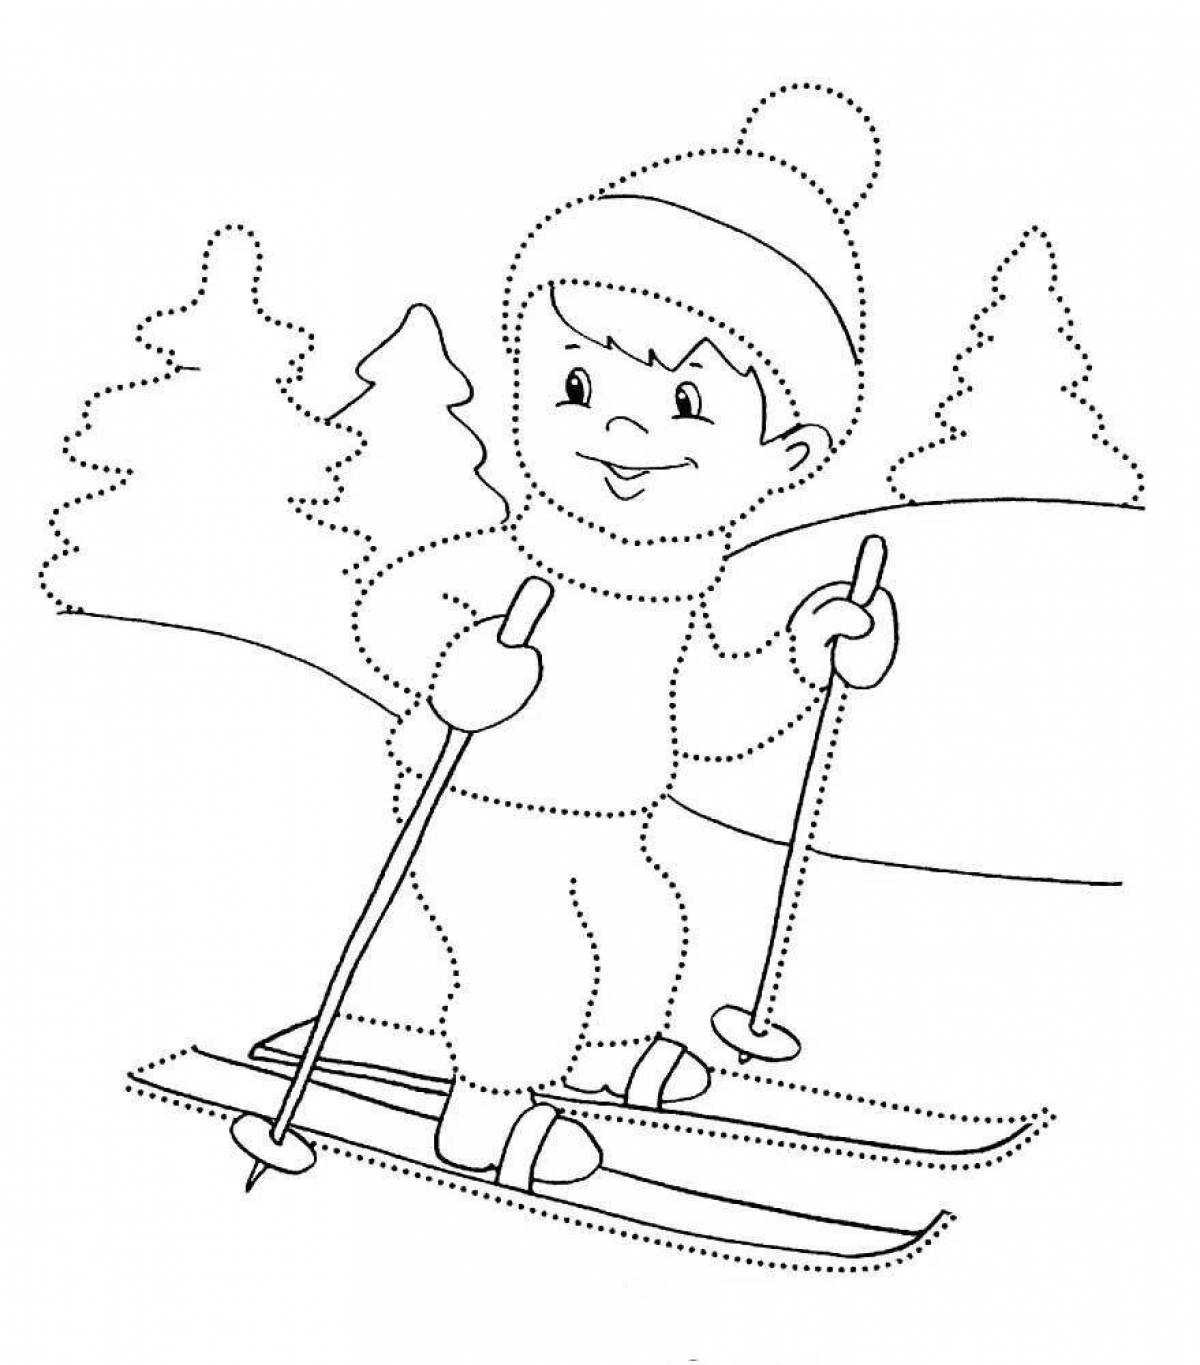 Skier for children 5 6 years old #5